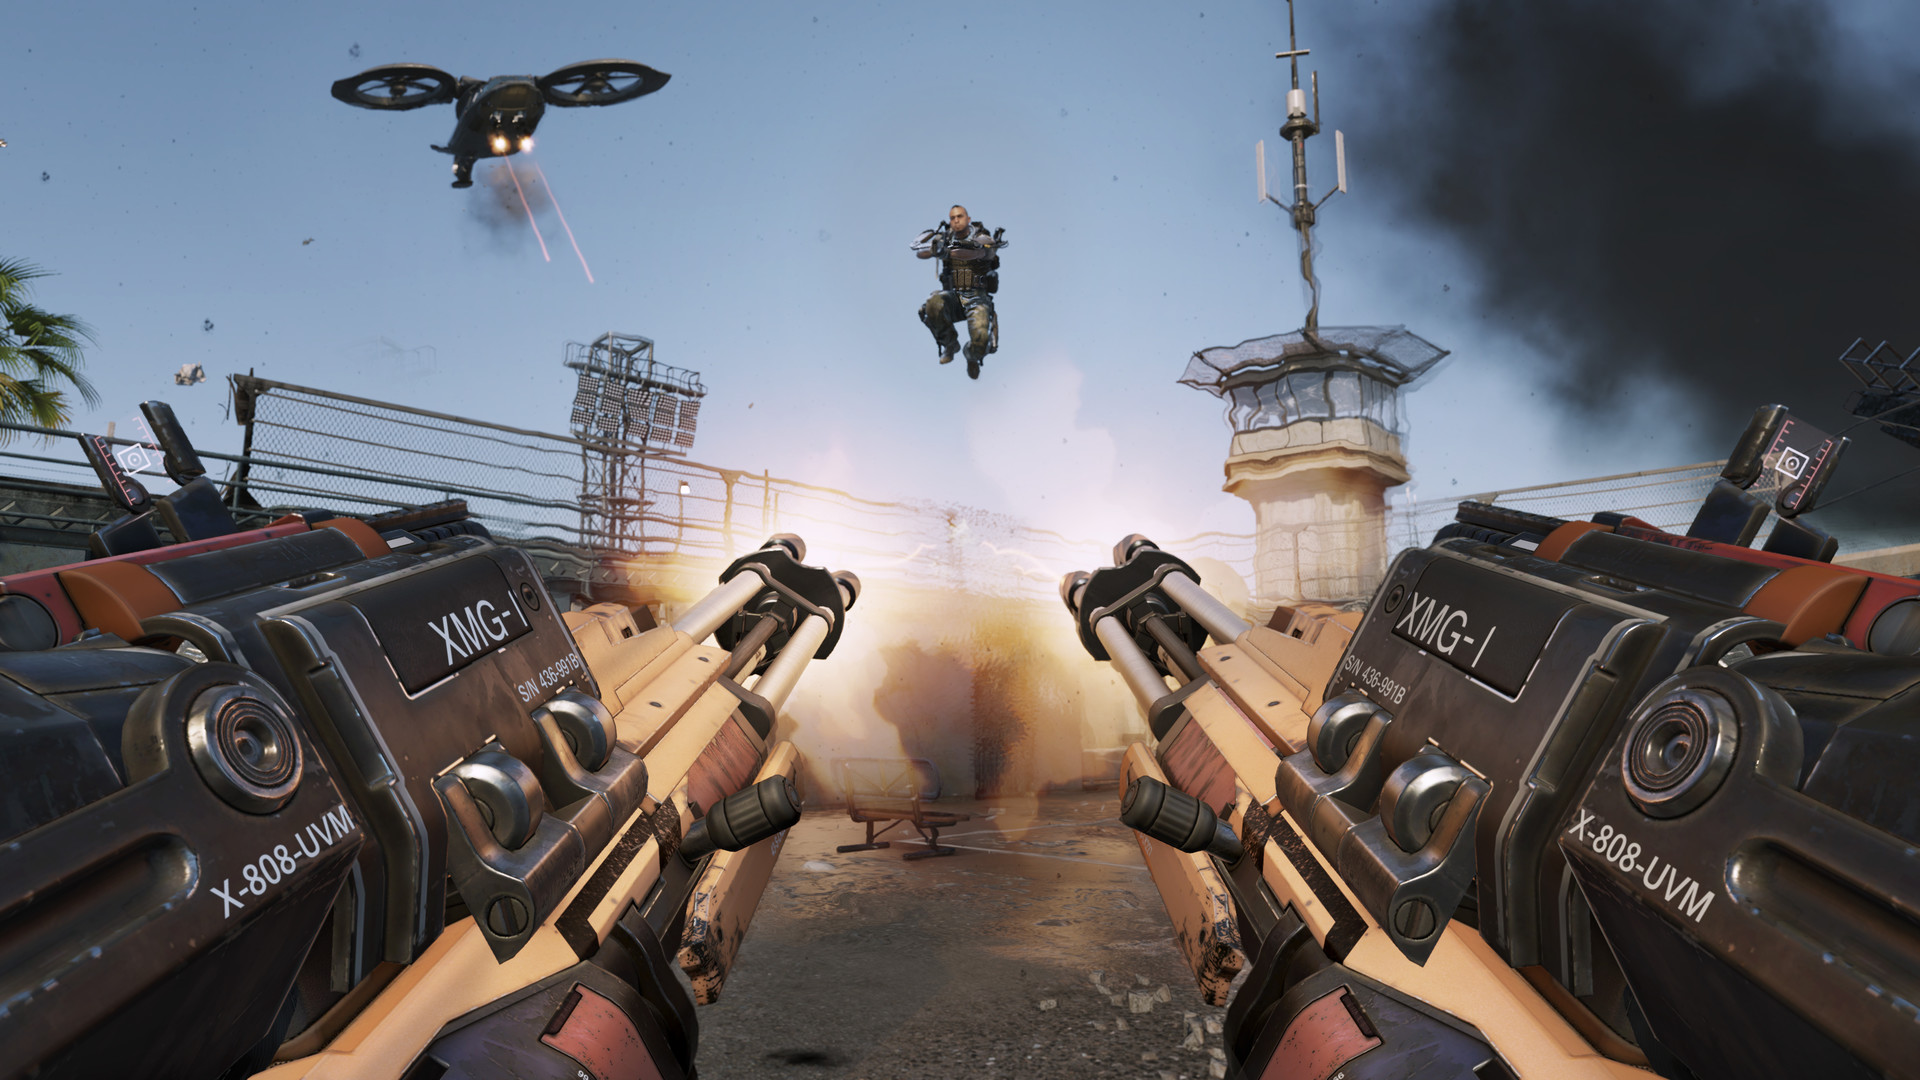 Call of Duty Advanced Warfare Digital Pro Edition full game 